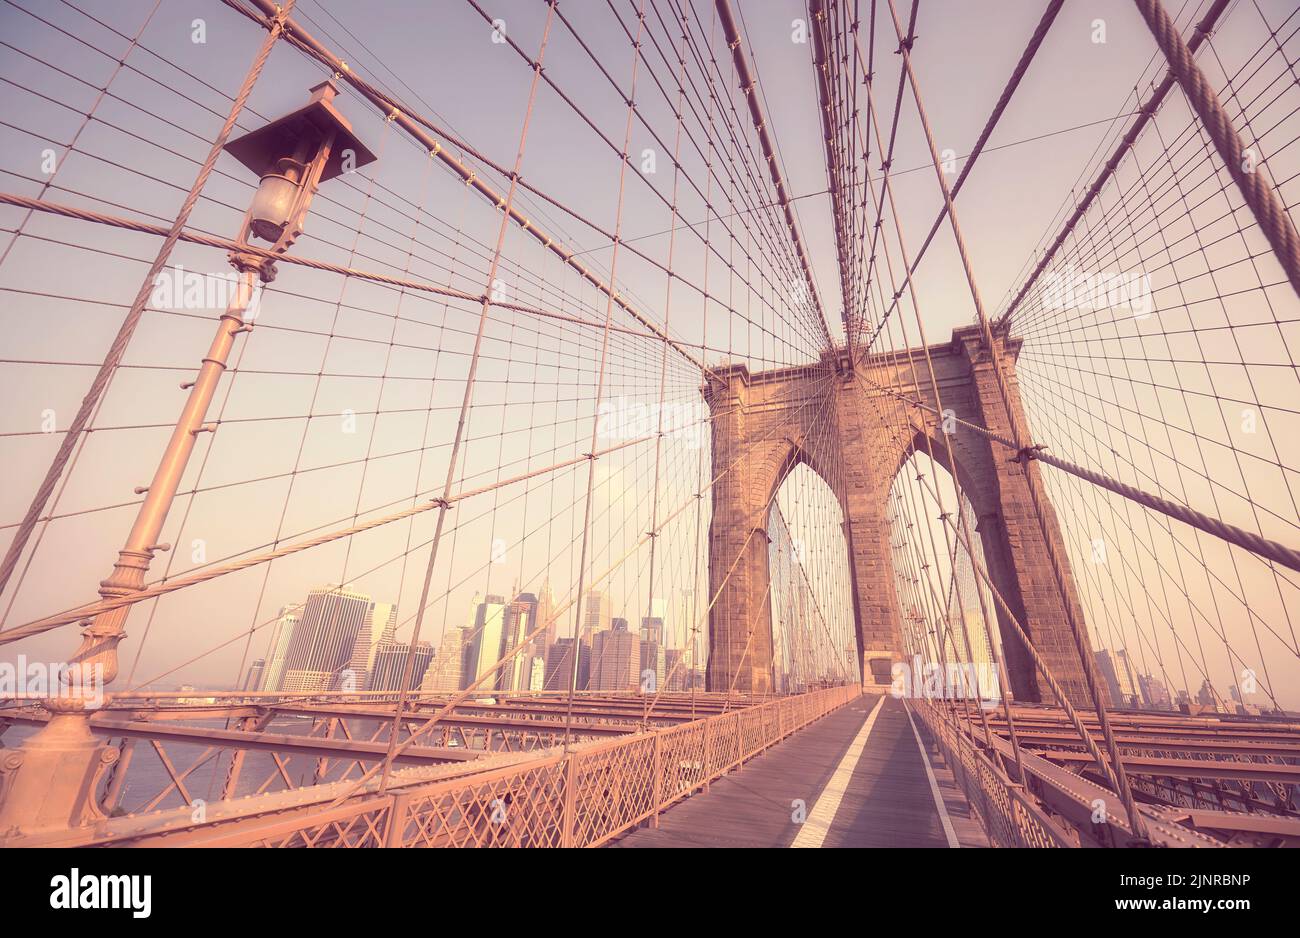 Retro stylized picture of the Brooklyn Bridge, New York City, USA. Stock Photo